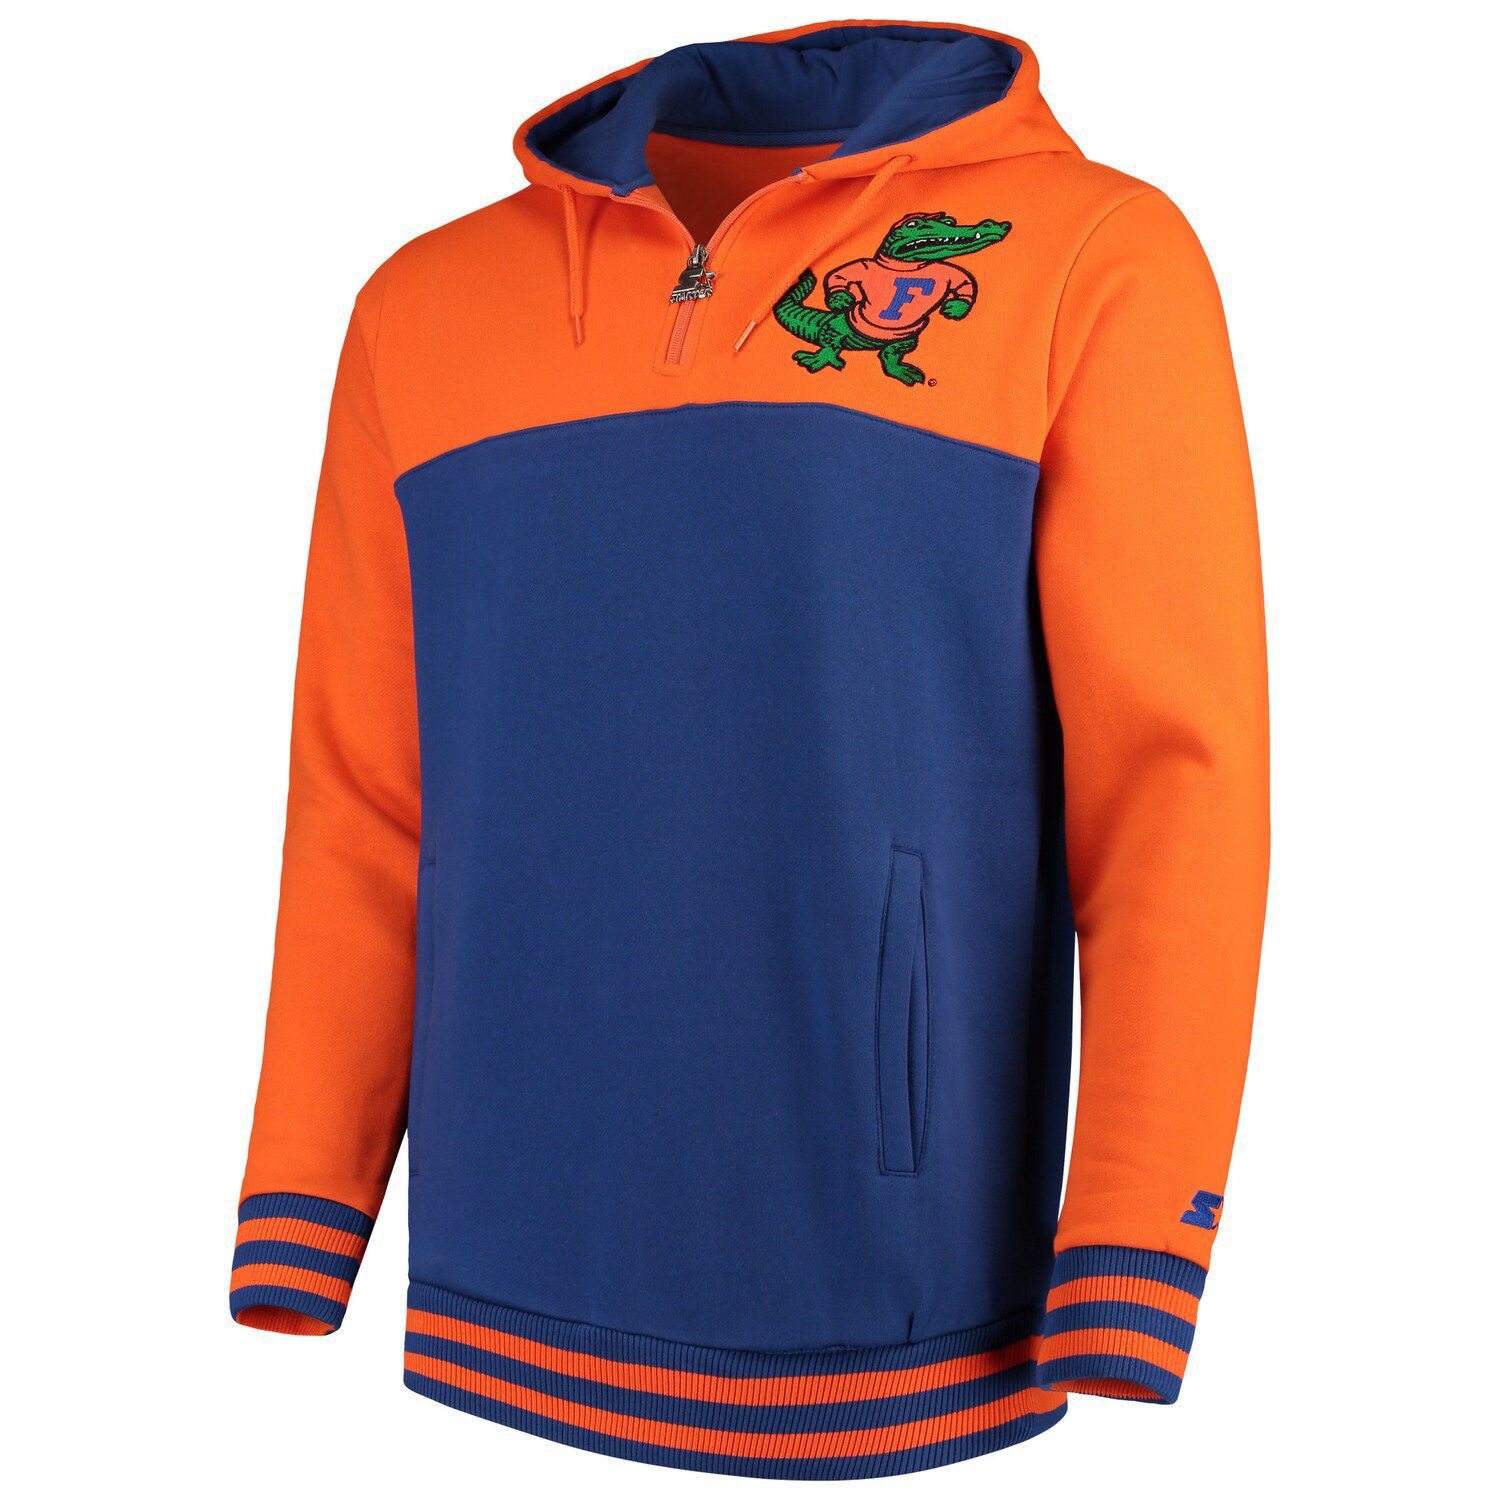 florida gators men's hoodie